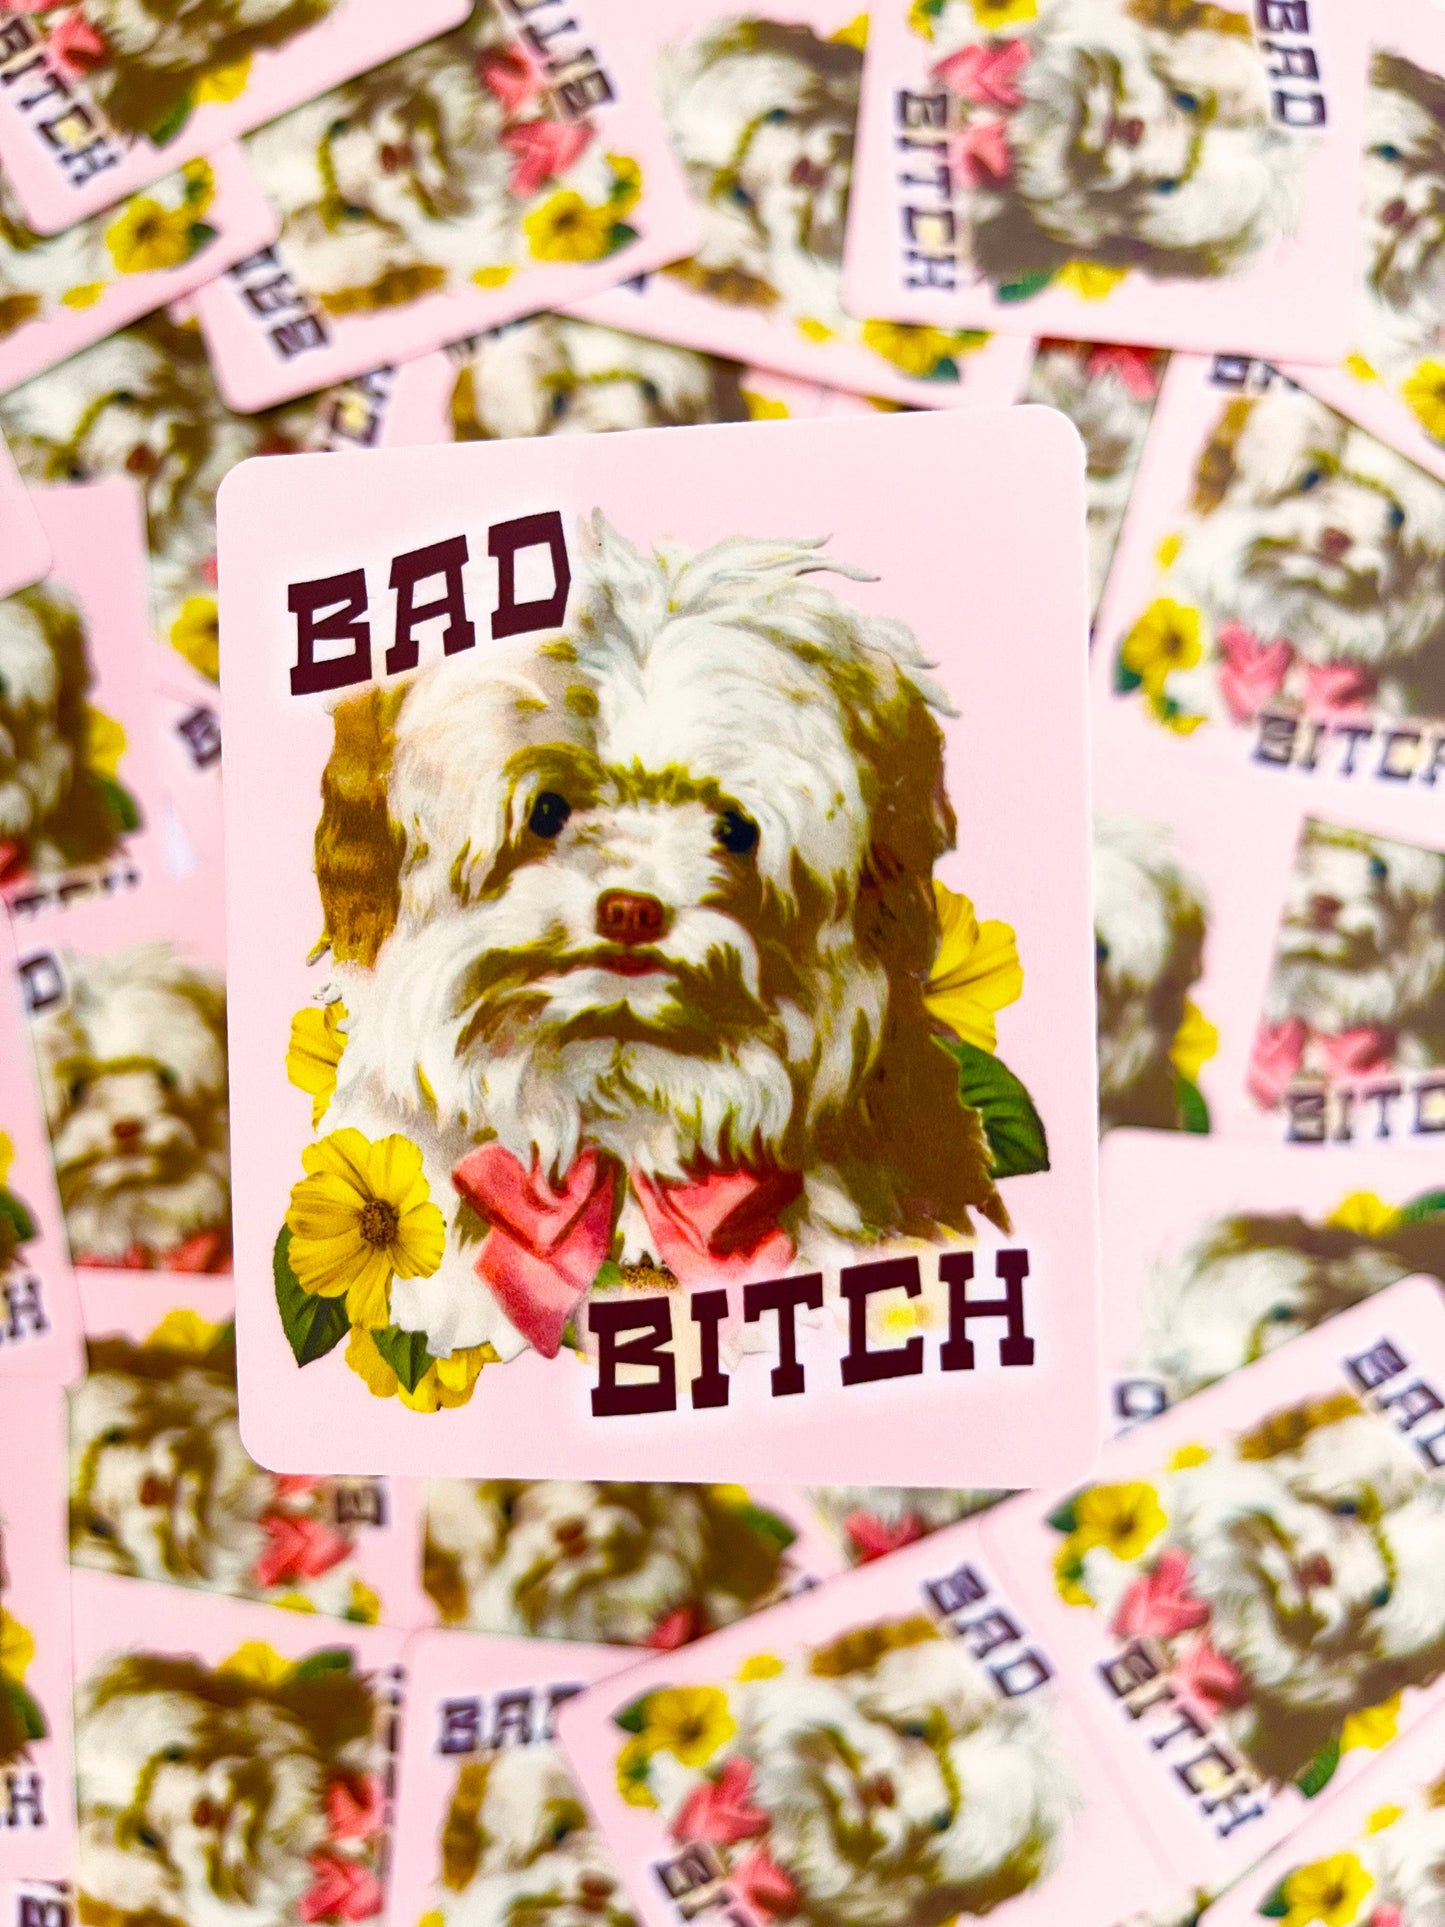 Bad Bitch Dog Sticker